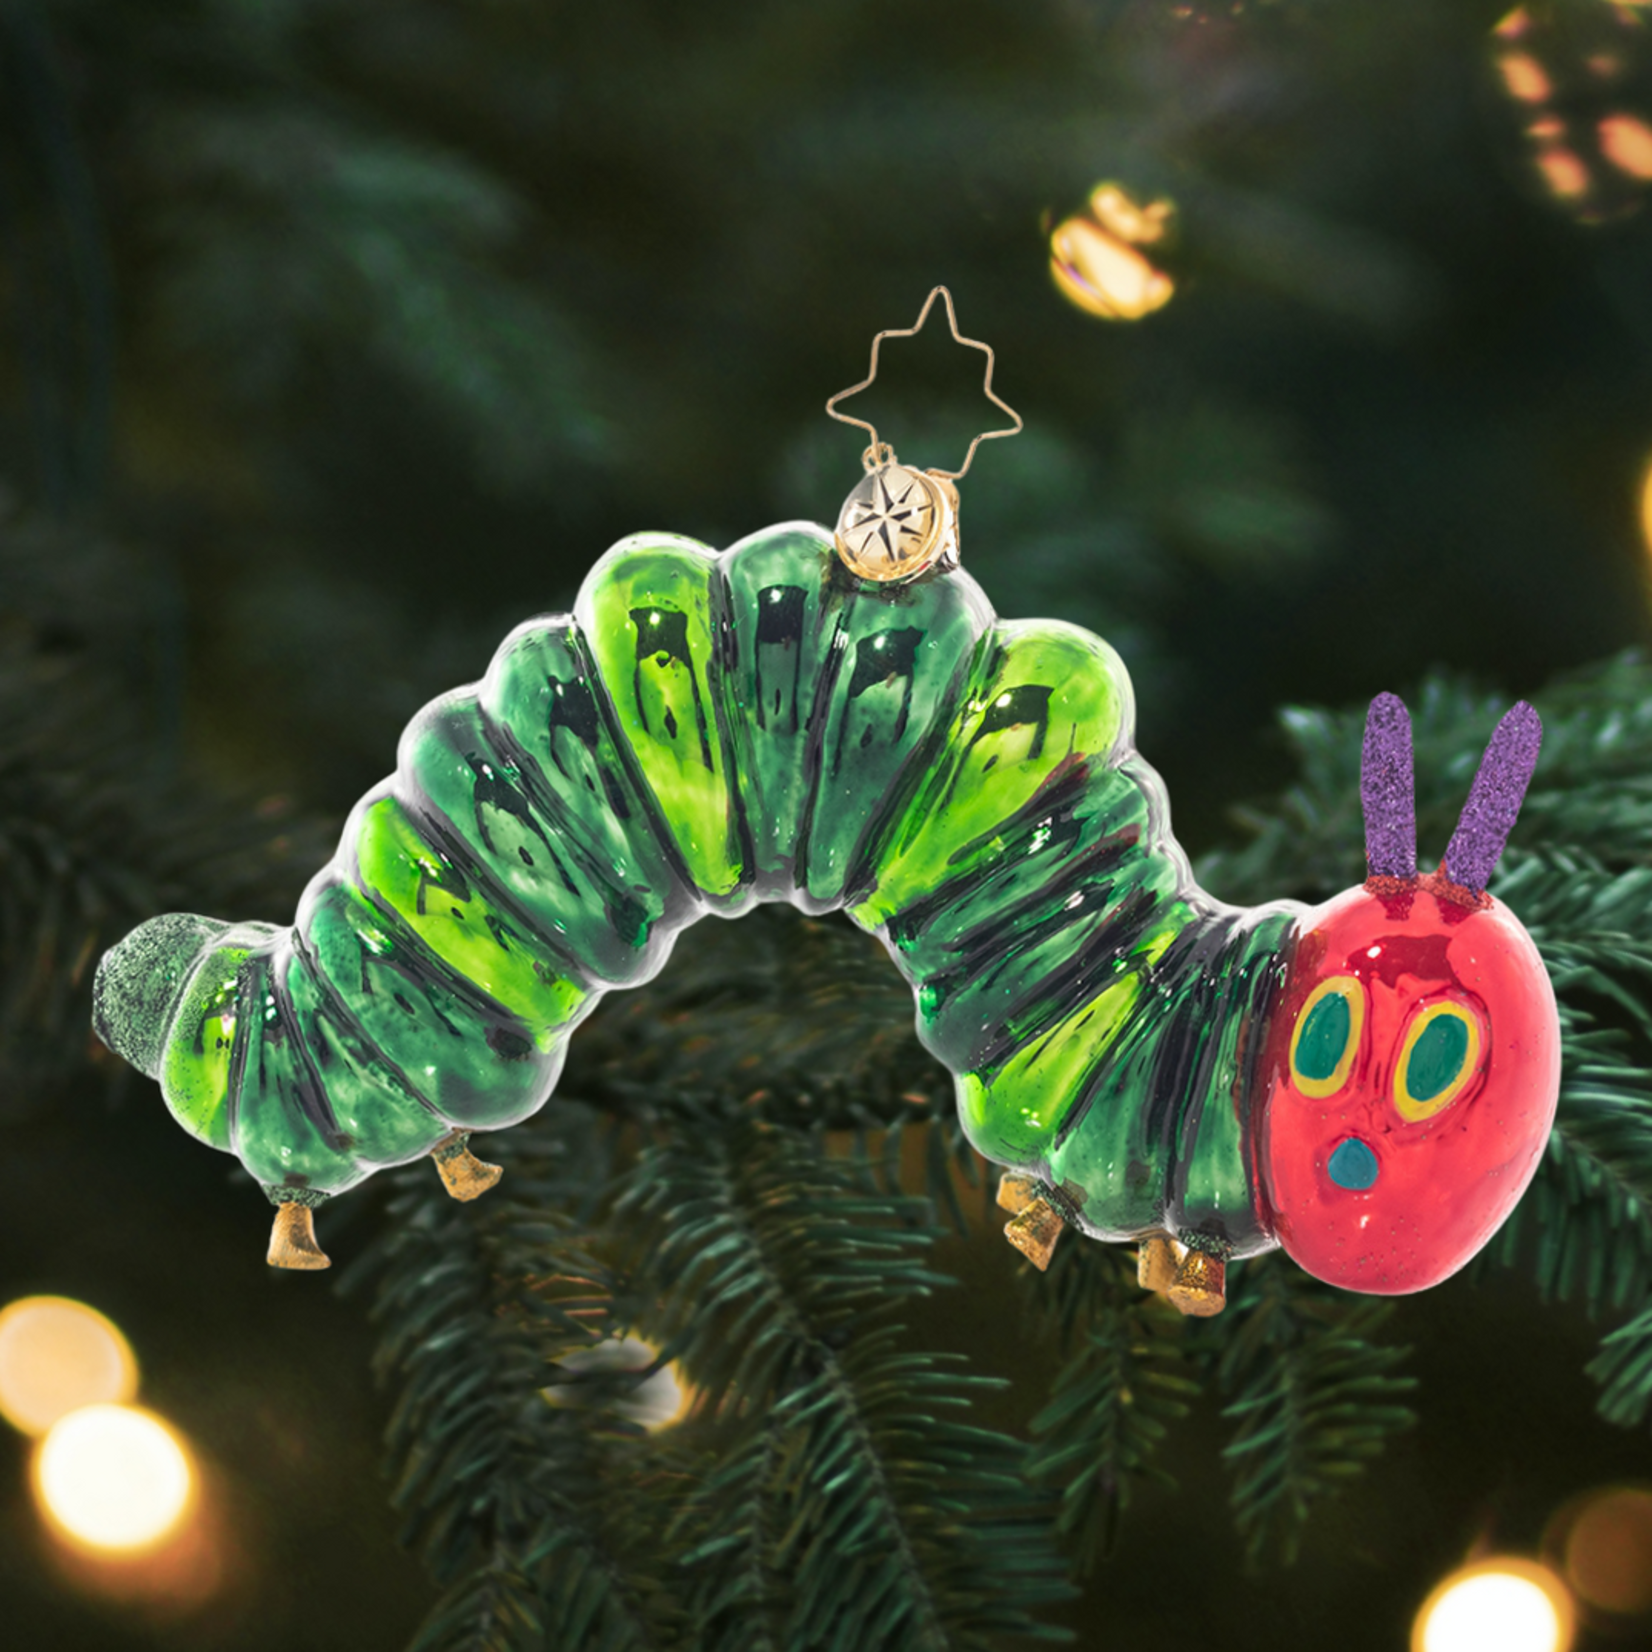 Christopher Radko The Very Hungry Caterpillar™ Ornament